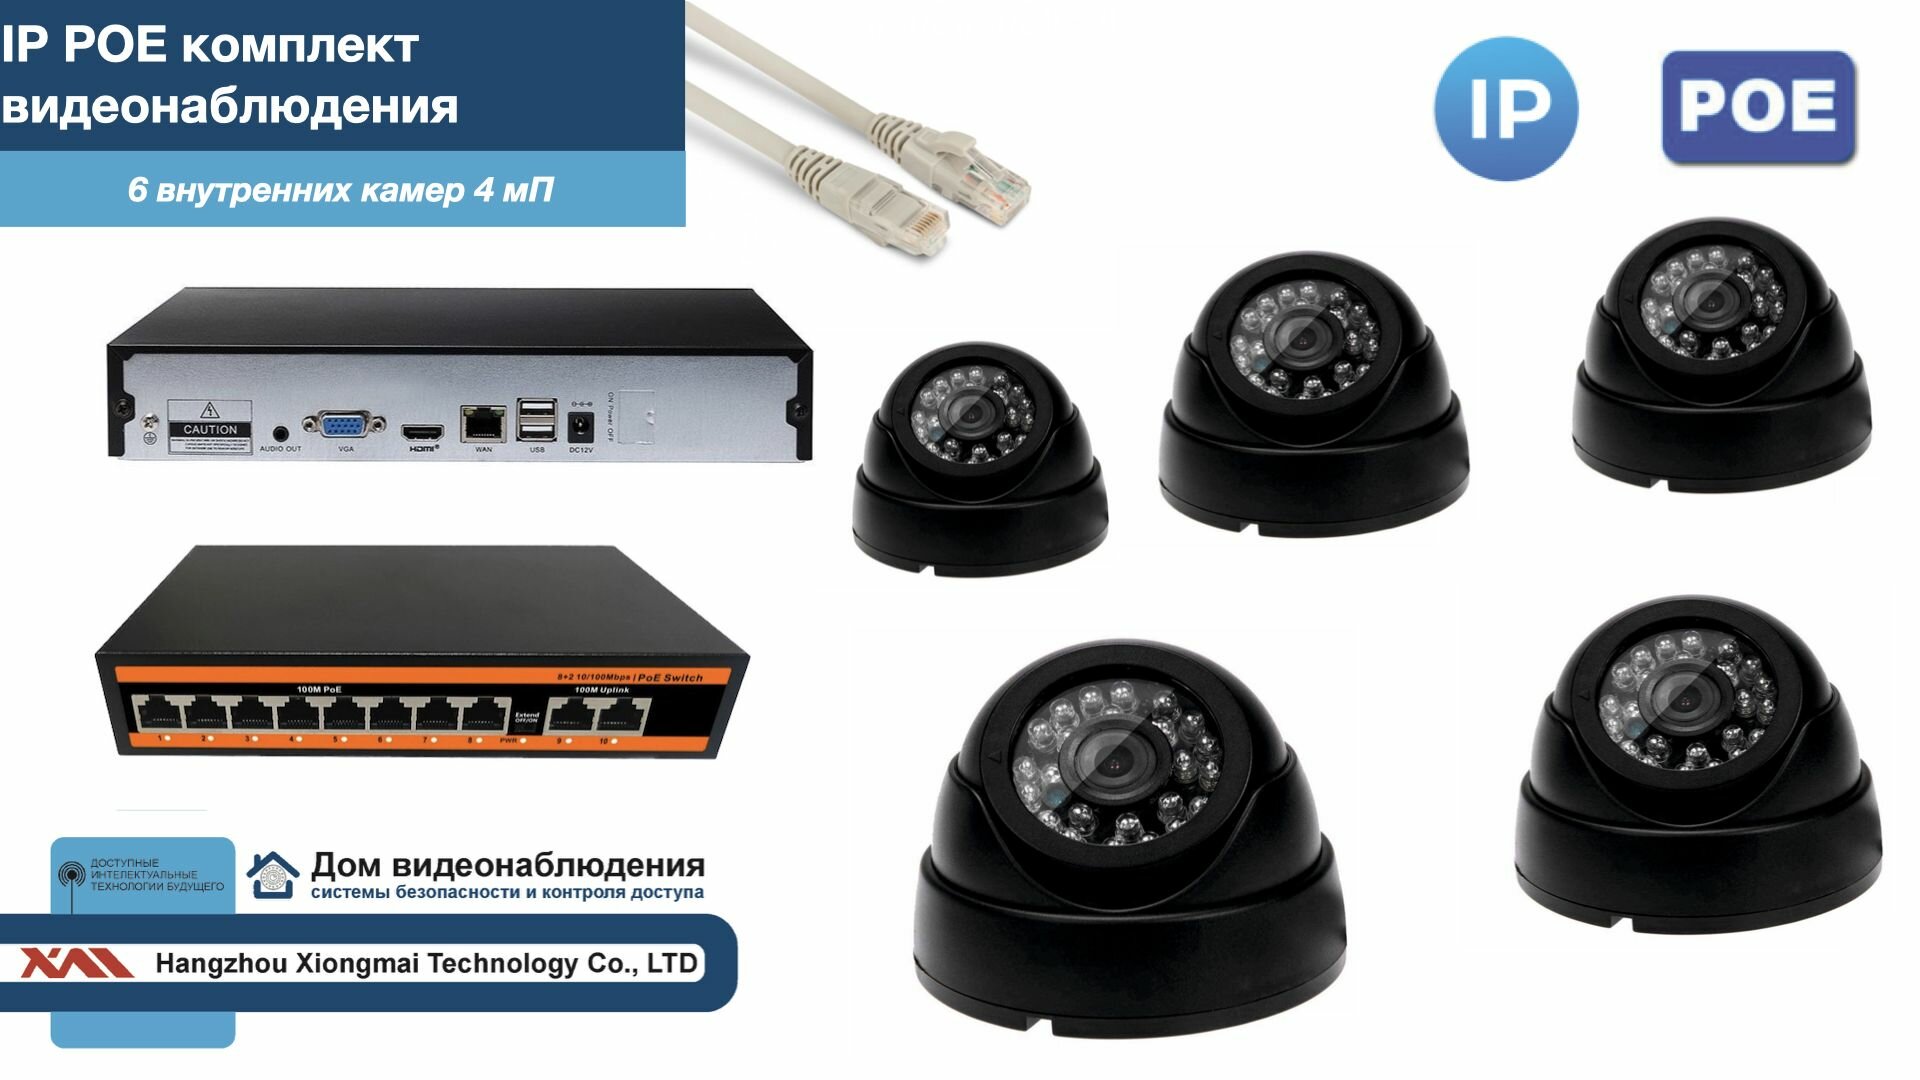 Полный IP POE комплект видеонаблюдения на 6 камер (KIT6IPPOE300B4MP)